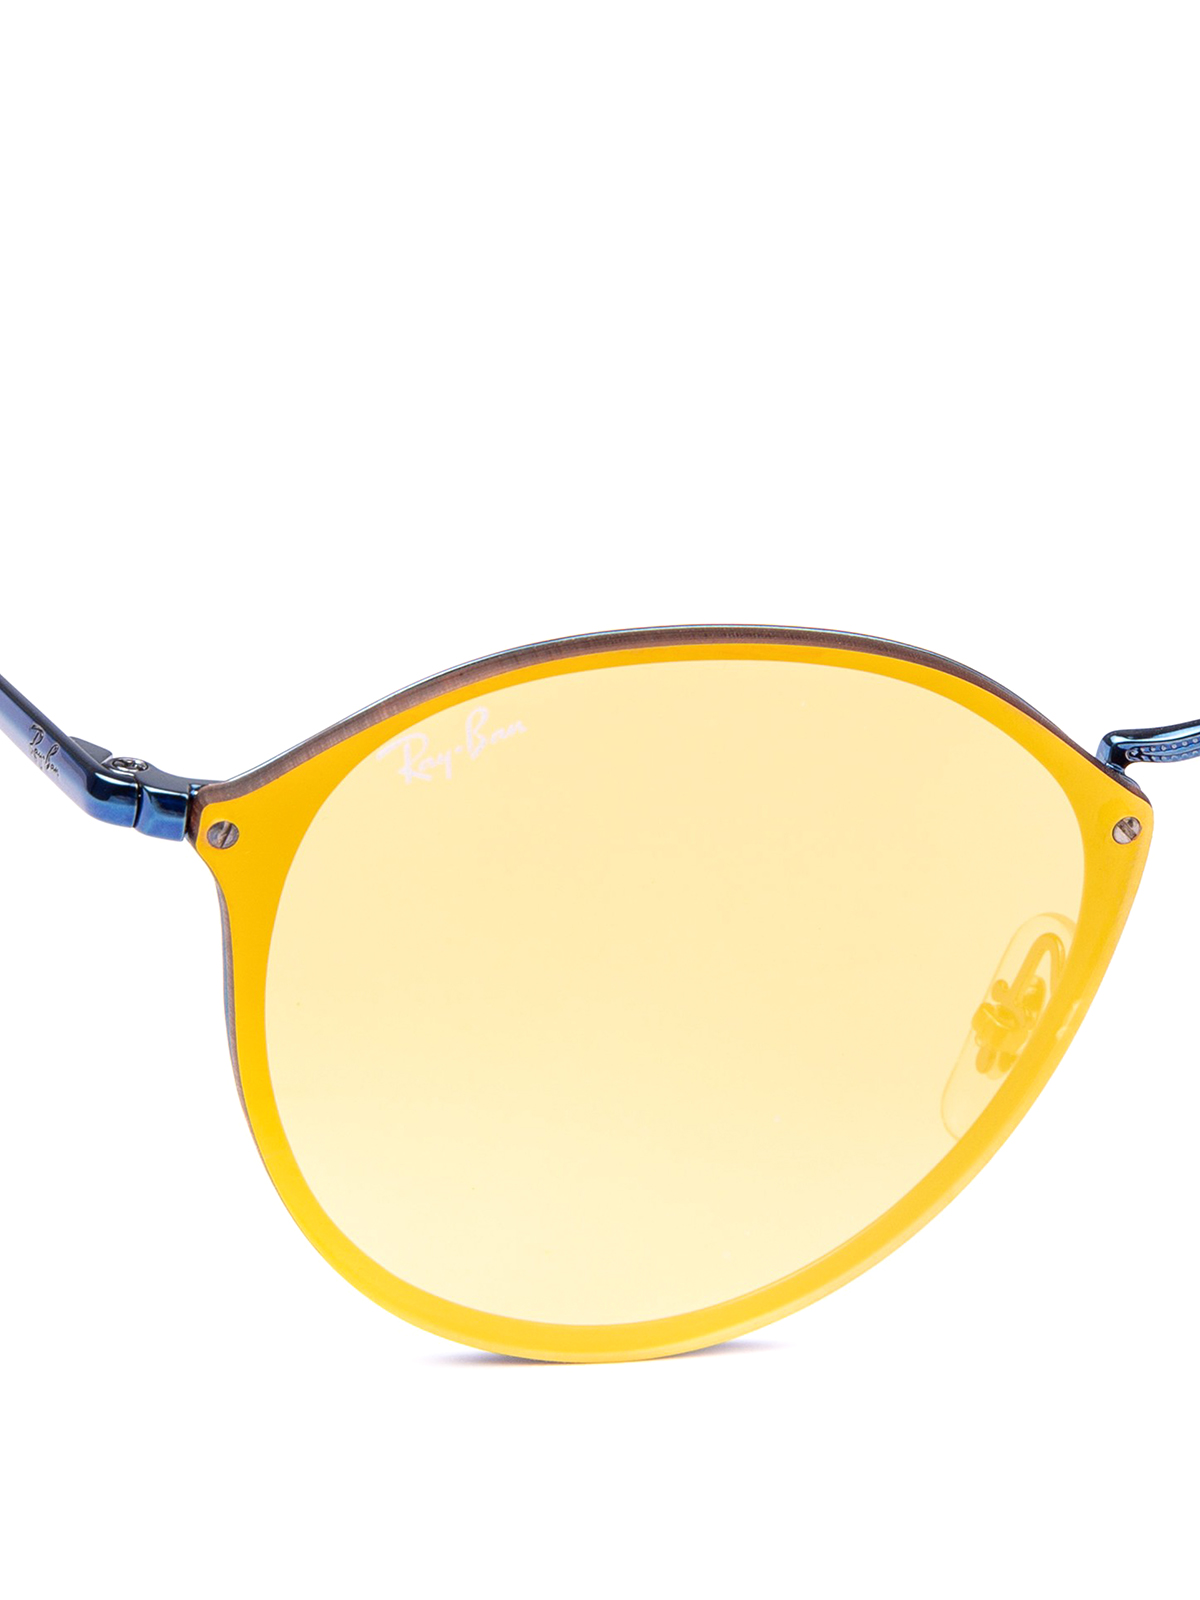 Sunglasses Ray Ban - Yellow lenses and blue metal frame sunglasses -  RB3574N90387J